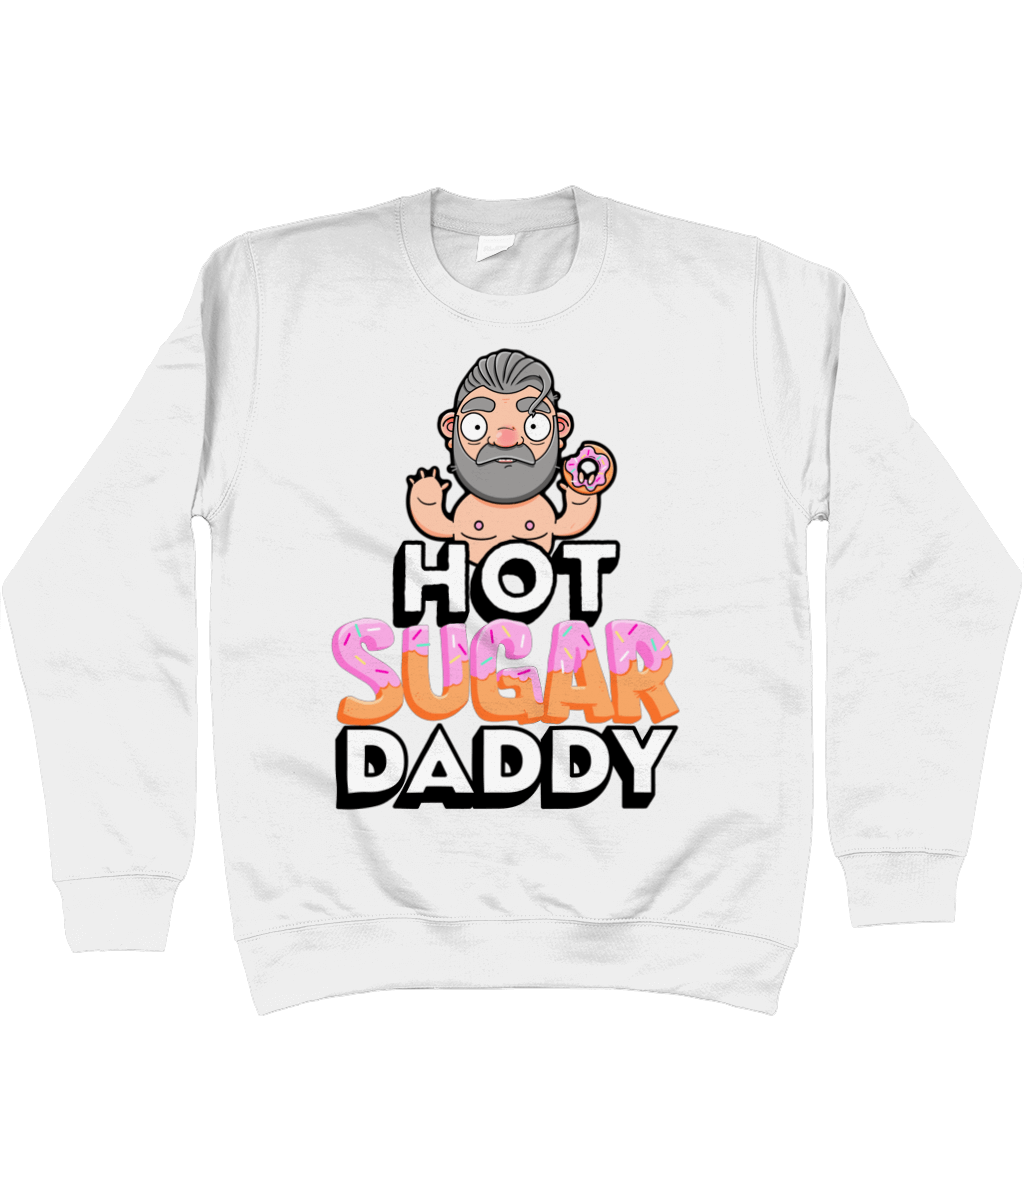 Fun design showcasing a silver haired gay daddy holding a sweet doughnut